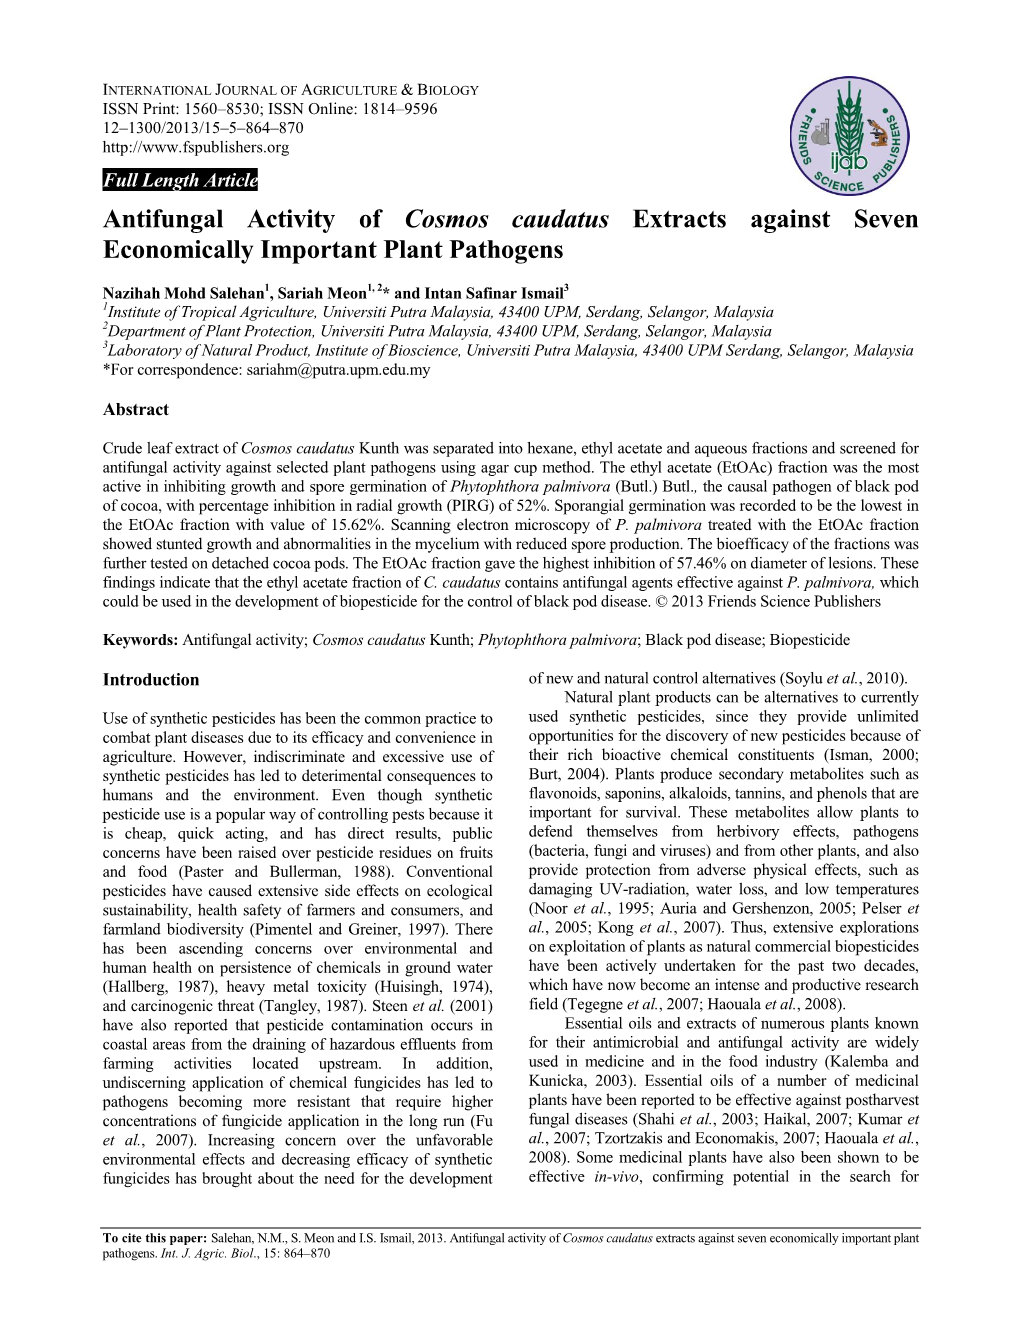 Antifungal Activity of Cosmos Caudatus Extracts Against Seven Economically Important Plant Pathogens